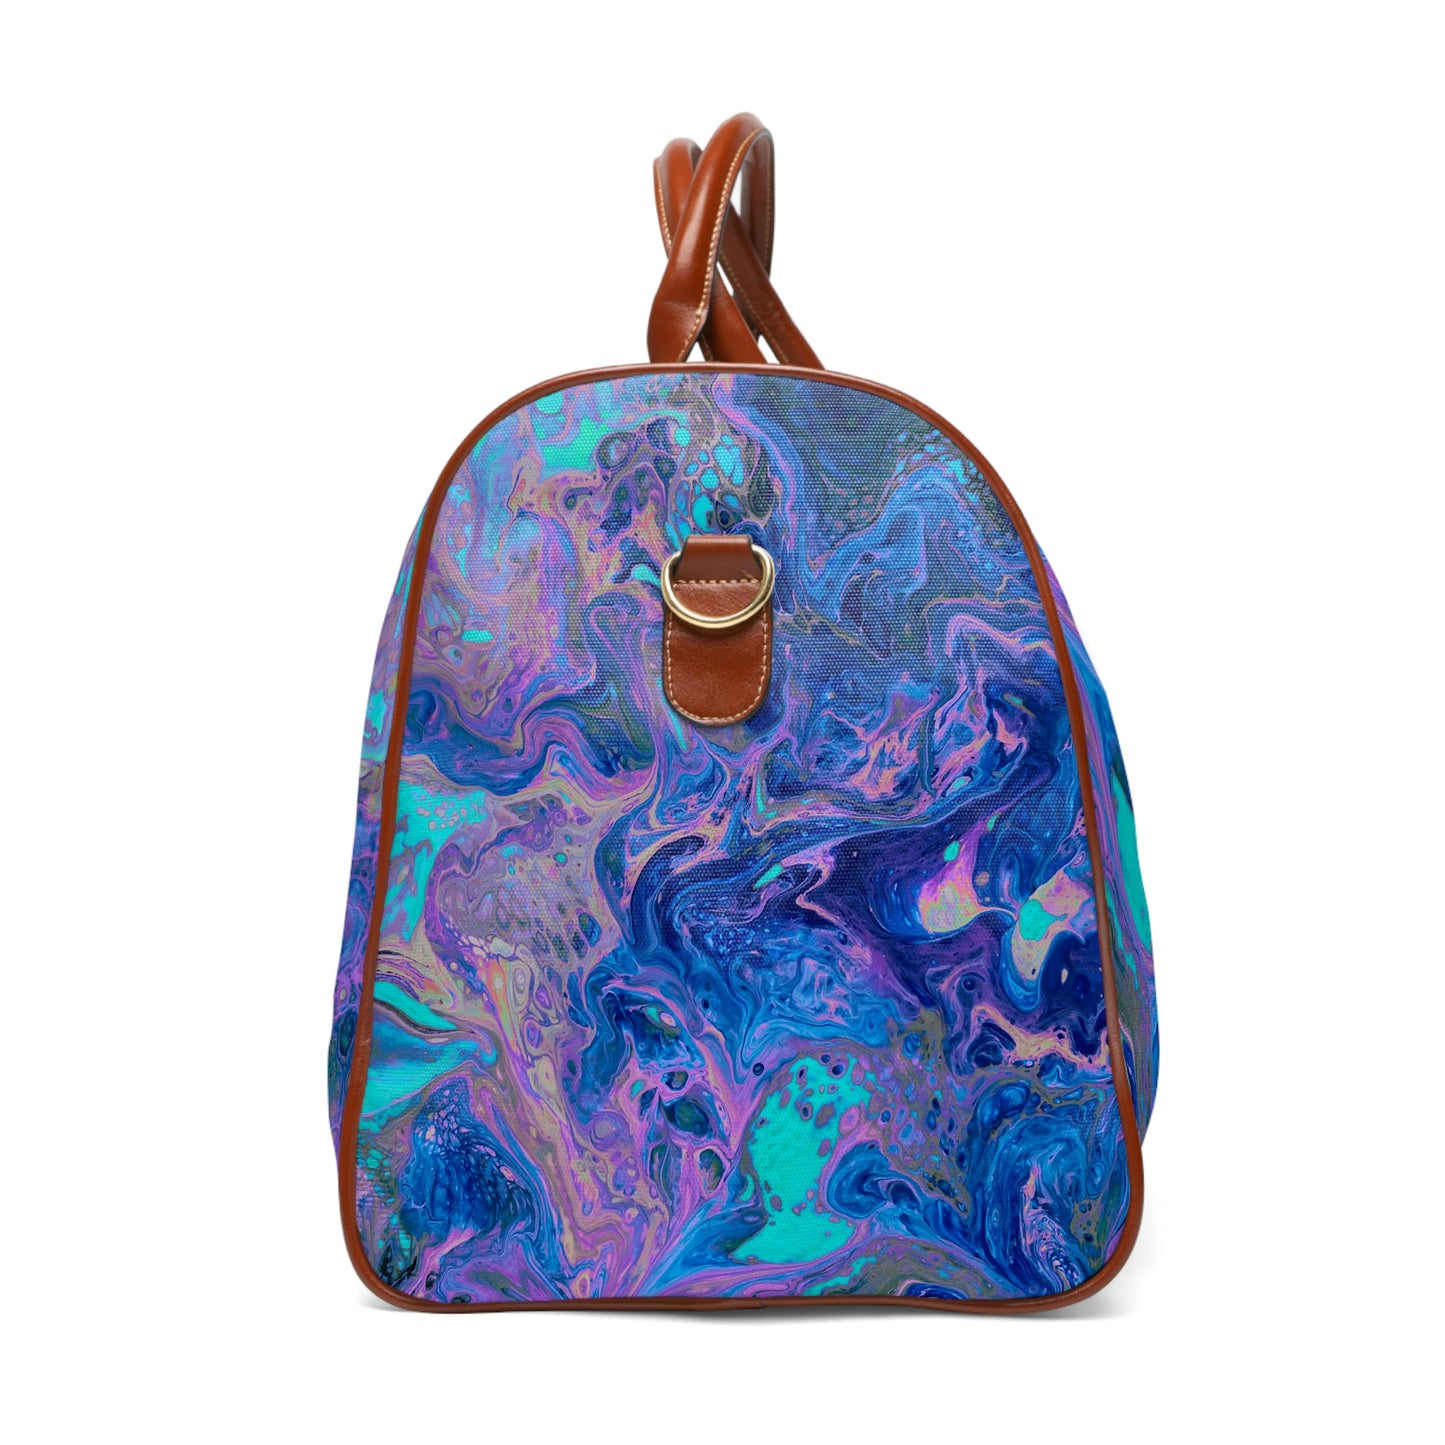 Waterproof Travel Bag - Friendship-Turquoise/Blue